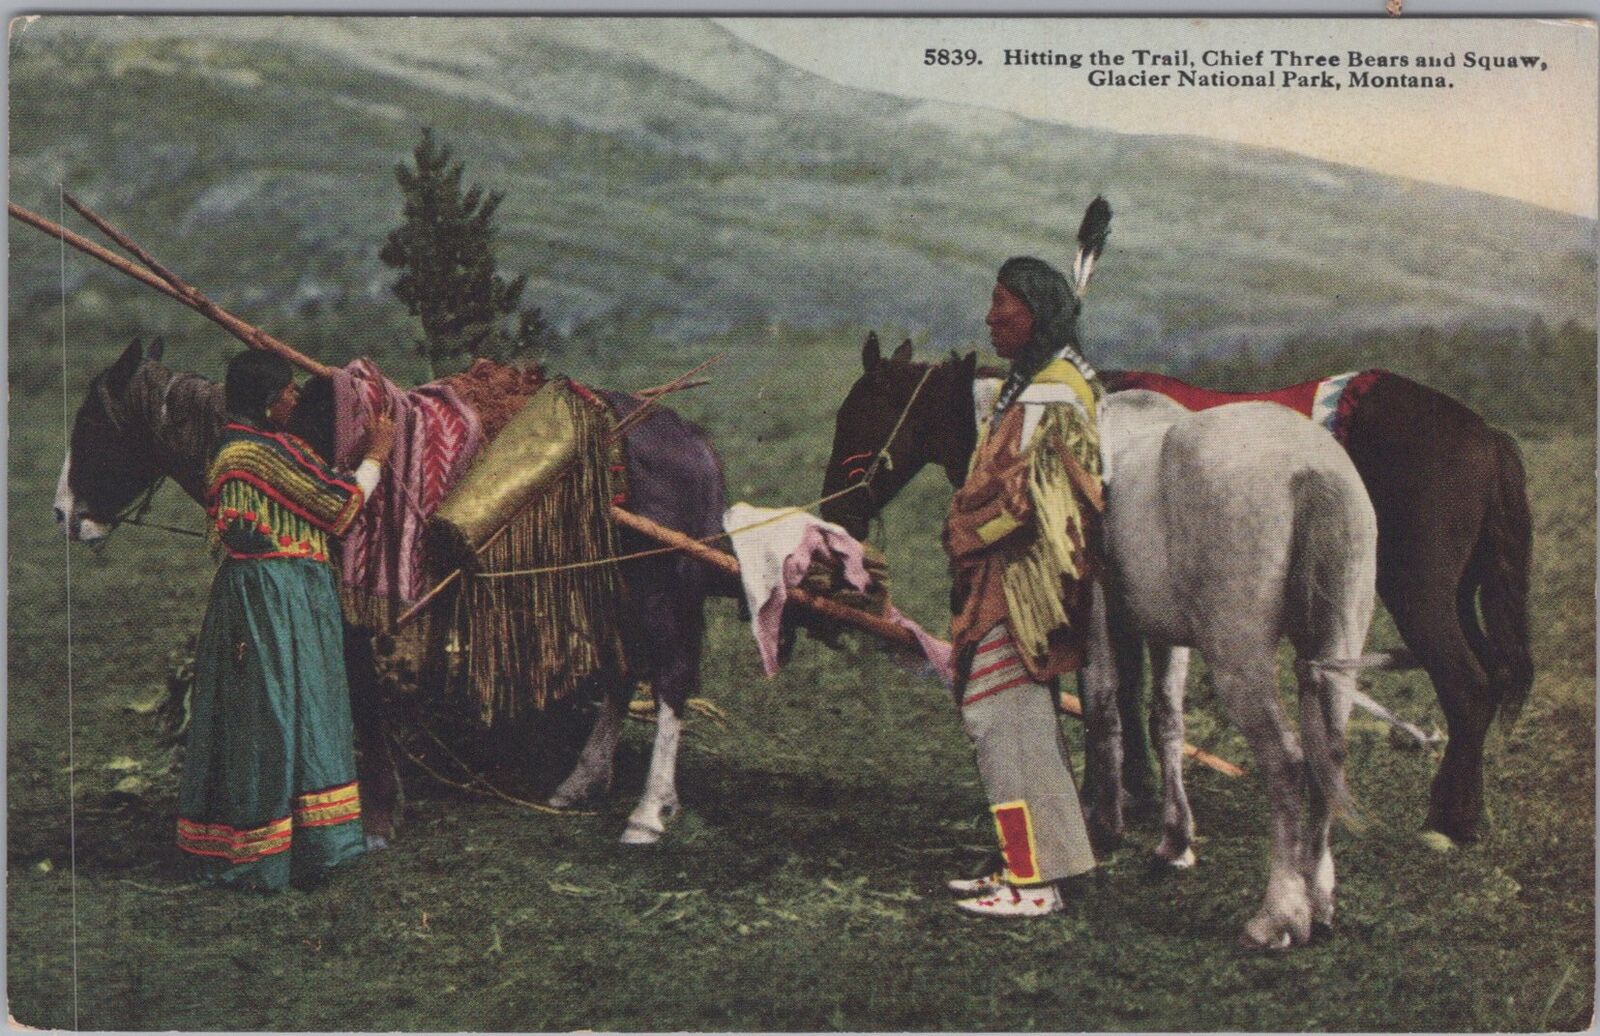 Chief Three Bears and Companion Glacier National Park Montana Postcard